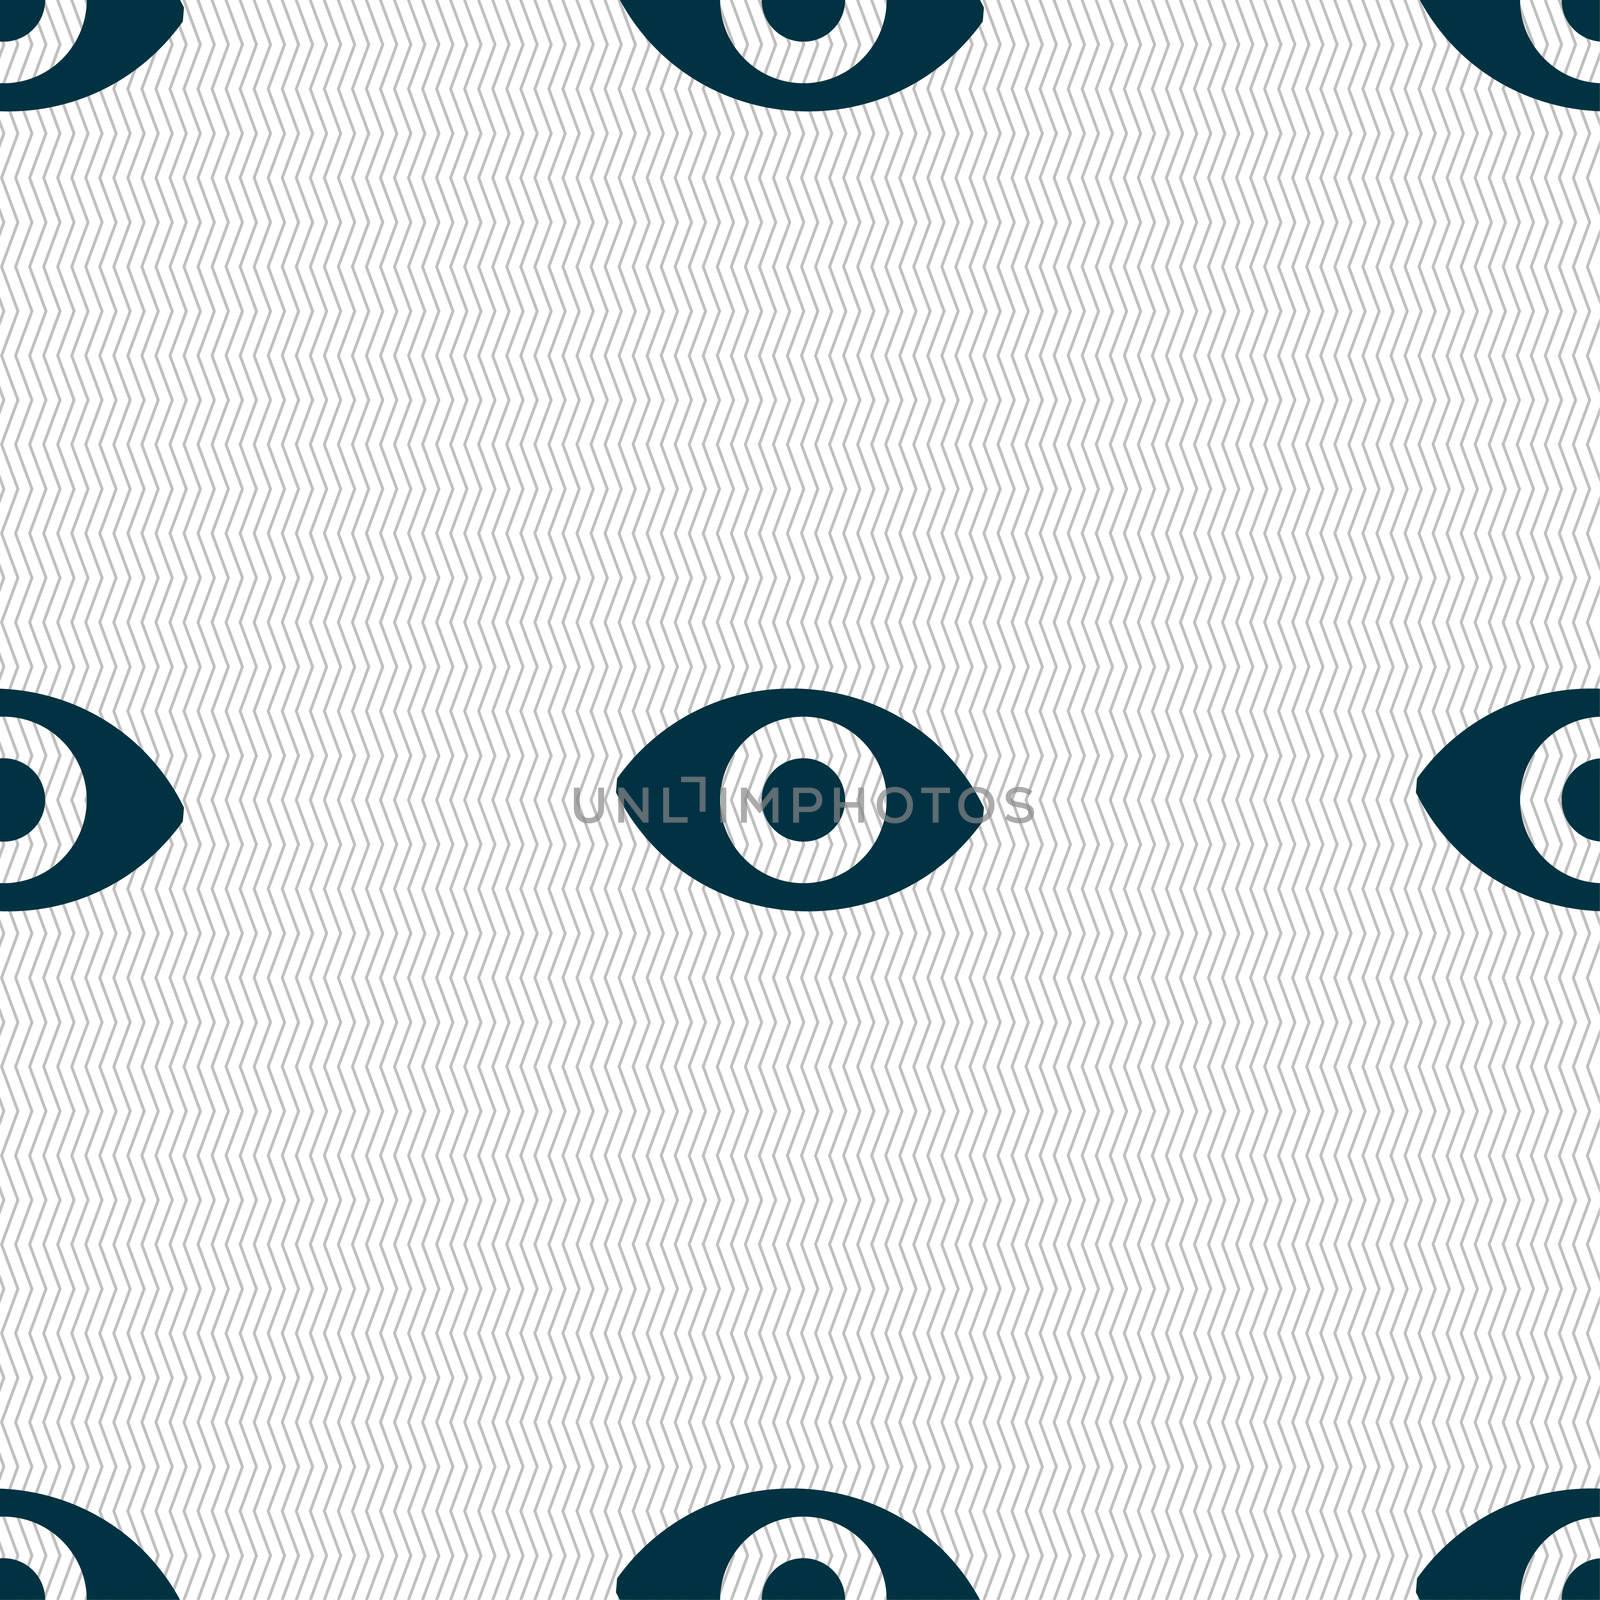 sixth sense, the eye icon sign. Seamless pattern with geometric texture.  by serhii_lohvyniuk